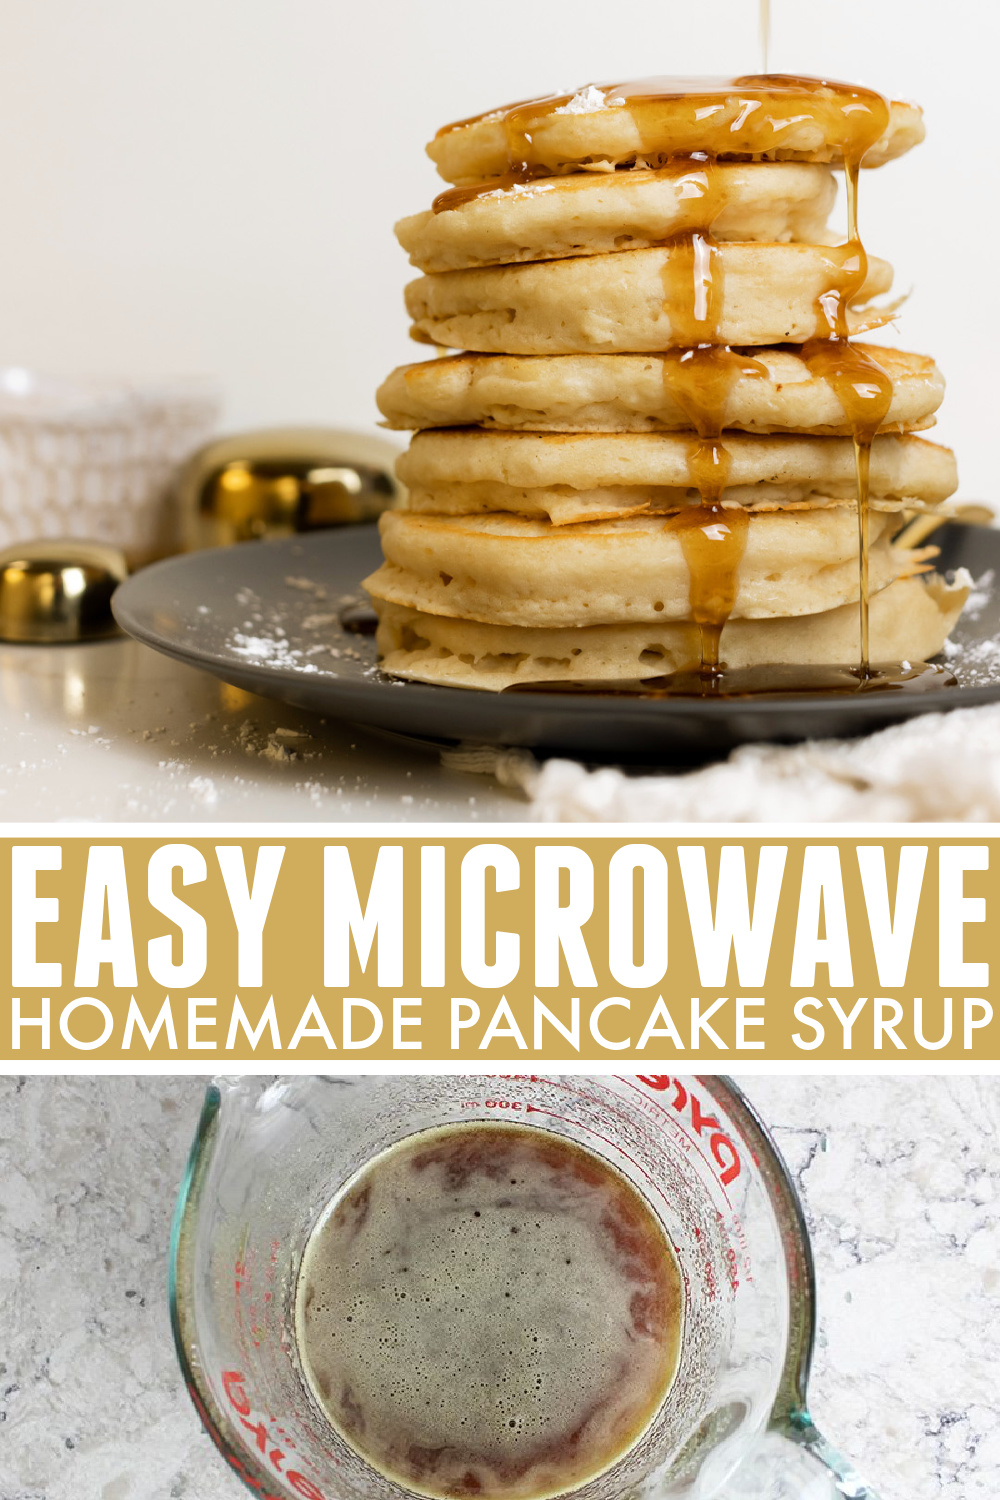 Recipe for making pancake syrup at home